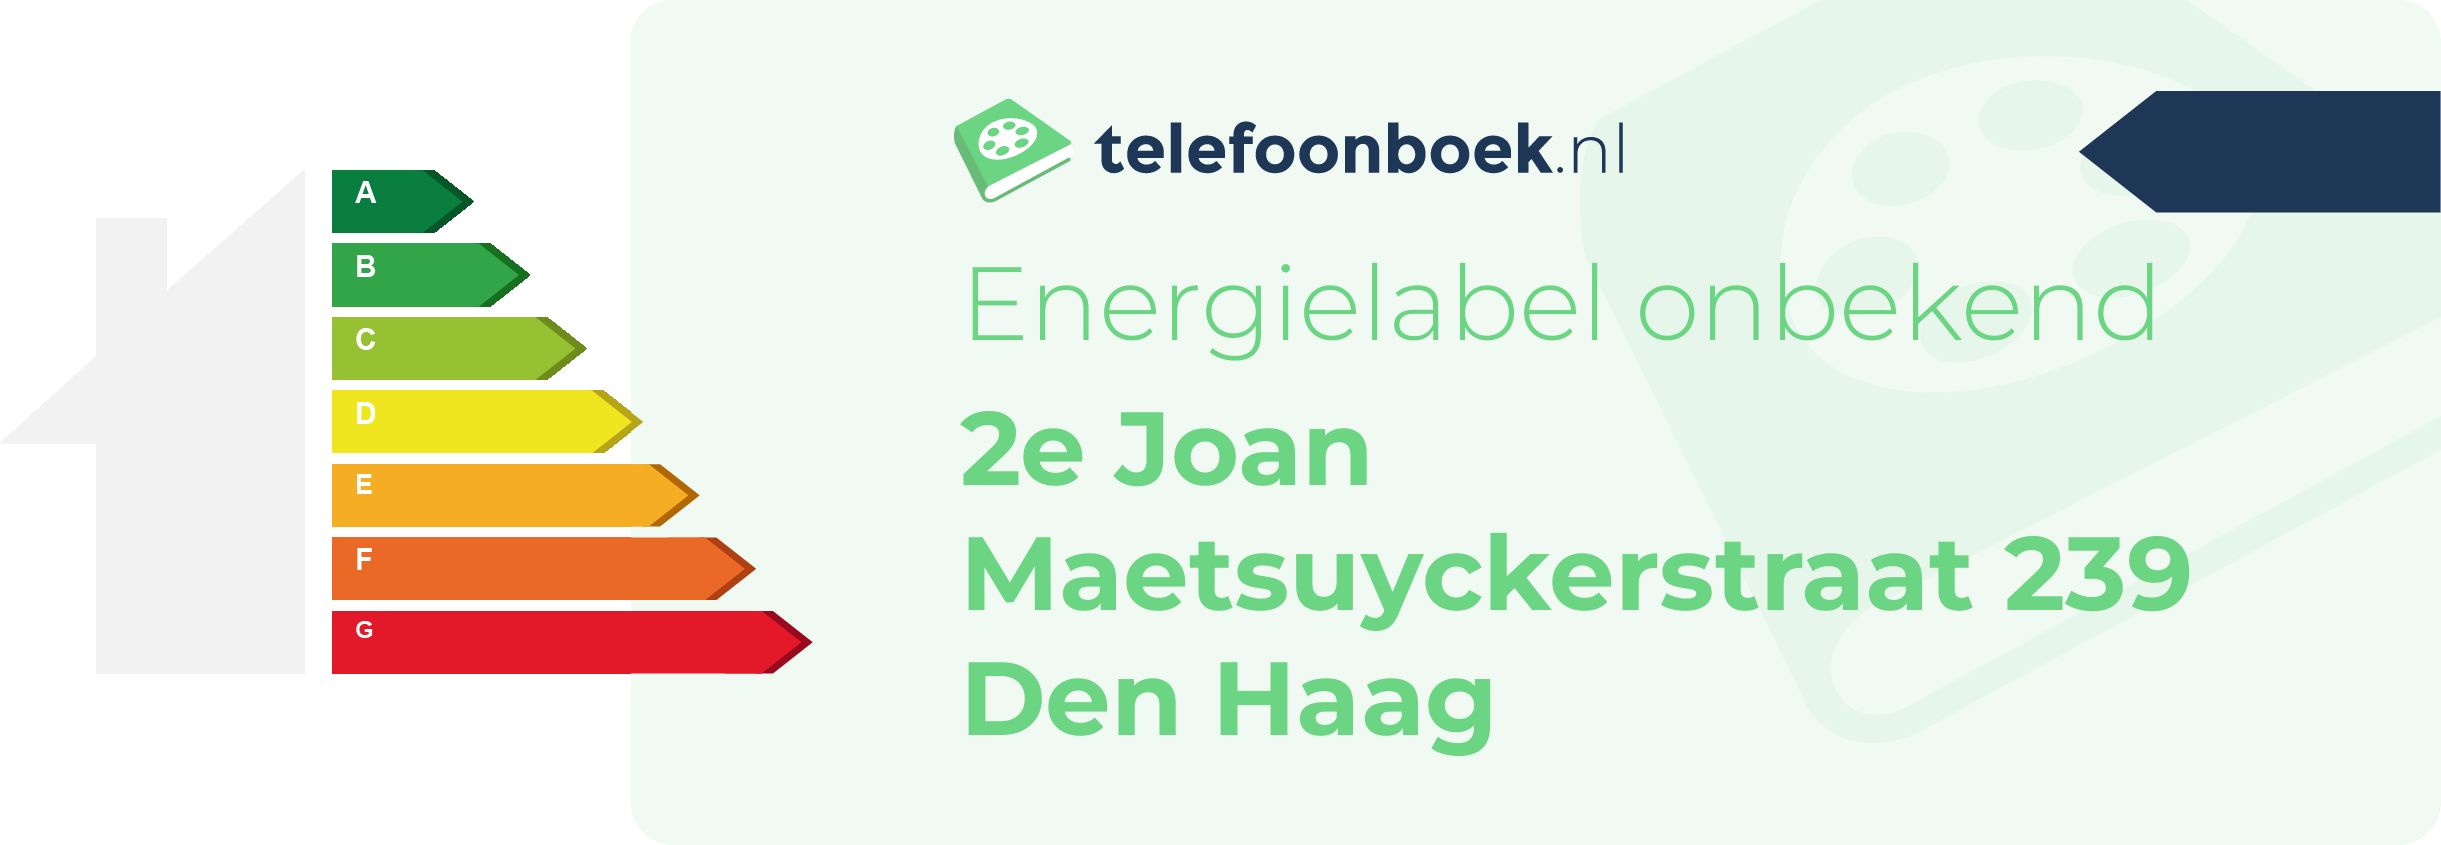 Energielabel 2e Joan Maetsuyckerstraat 239 Den Haag